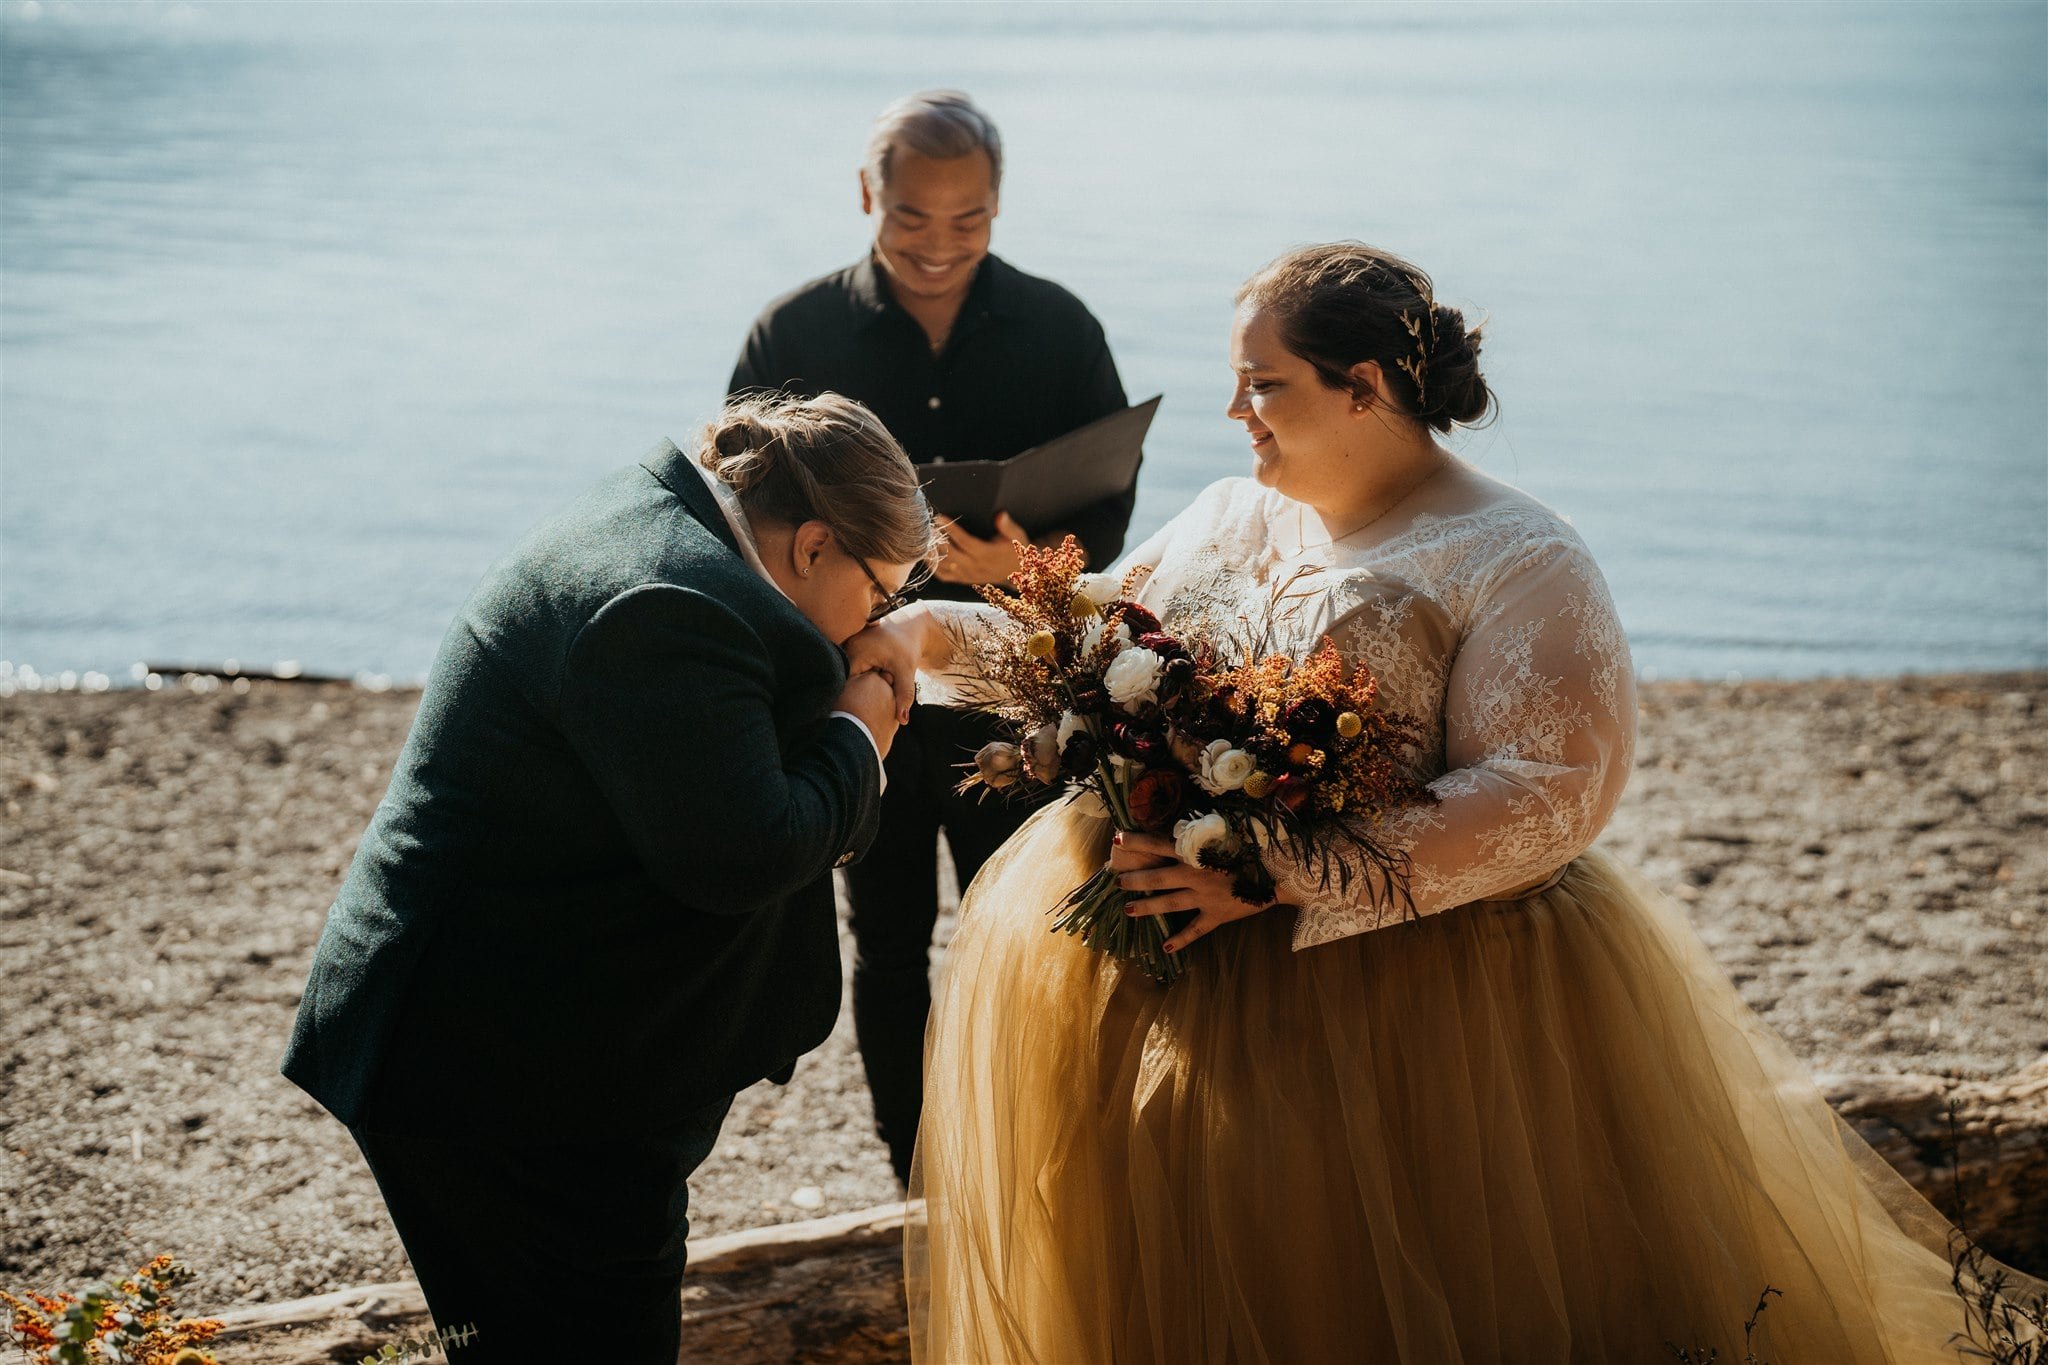 Bride kisses her bride's hand during Lake Crescent elopement ceremony